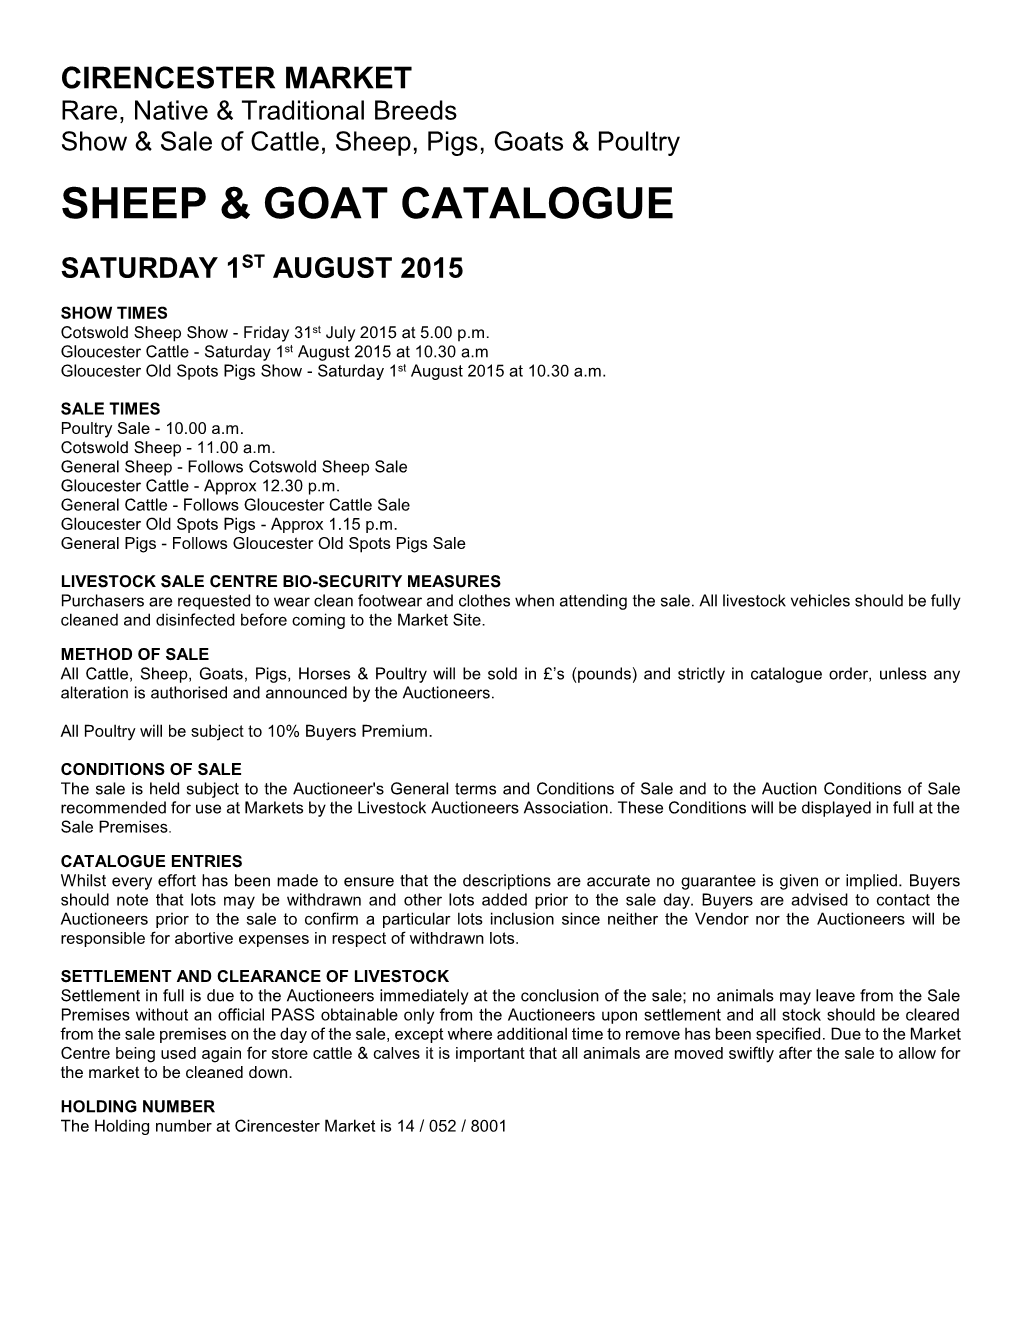 Sheep & Goat Catalogue